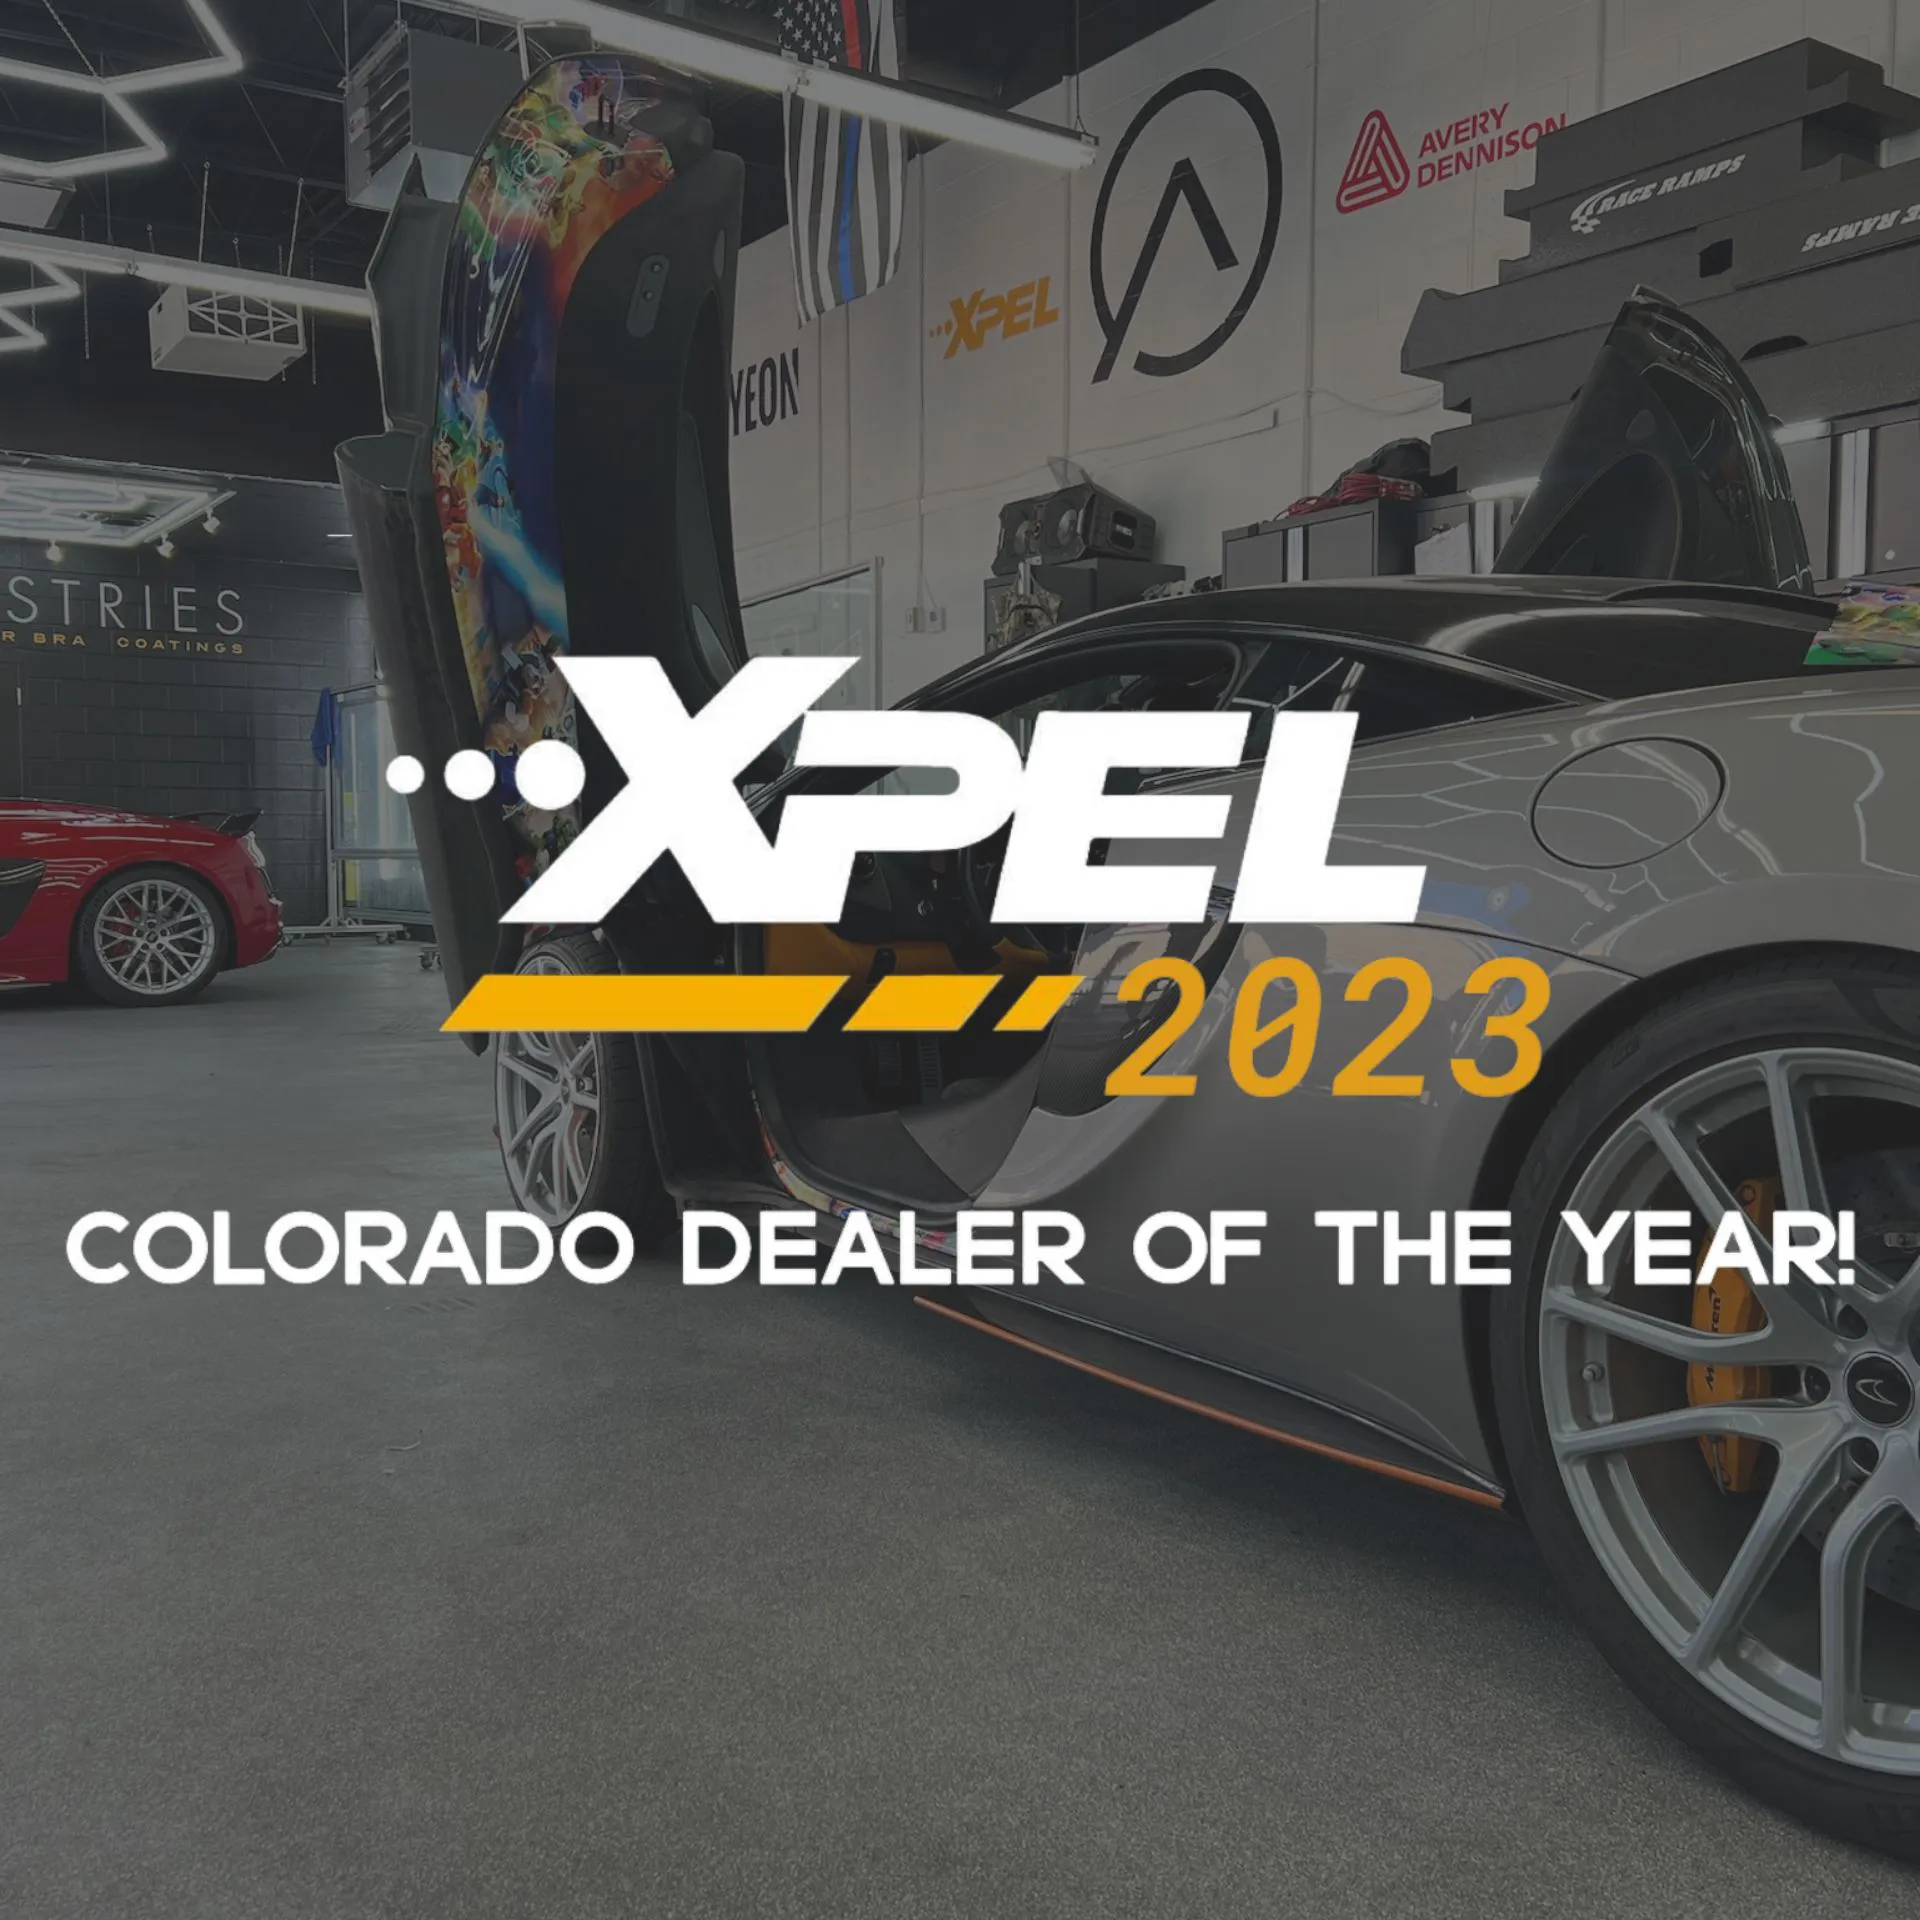 Xpel Colorado Dealer of the Year